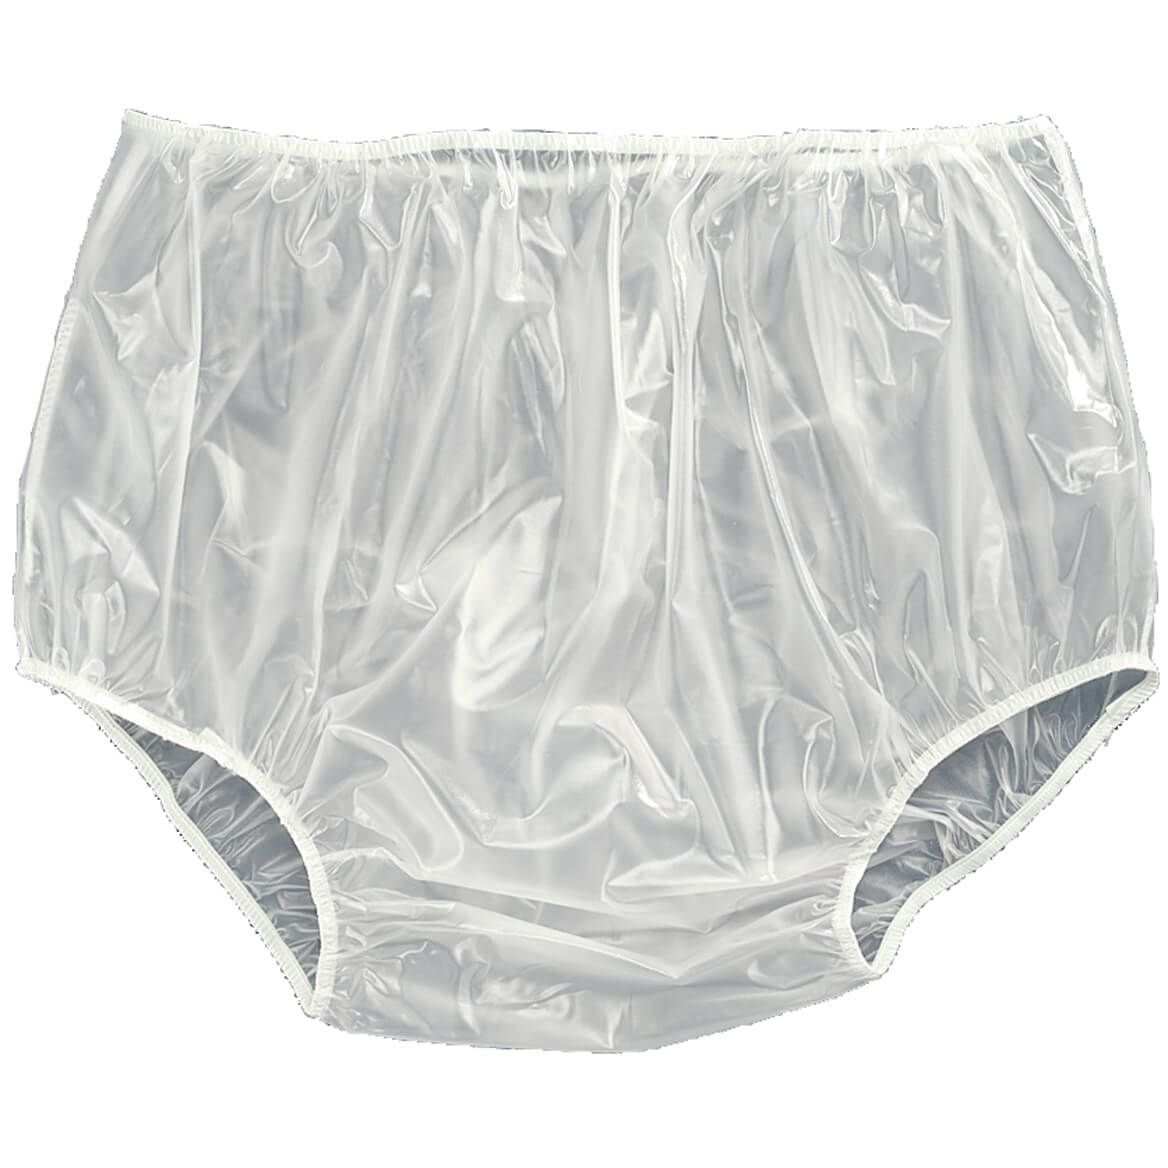 9 Pcs Waterproof Incontinence Underpants Plastic Ghana